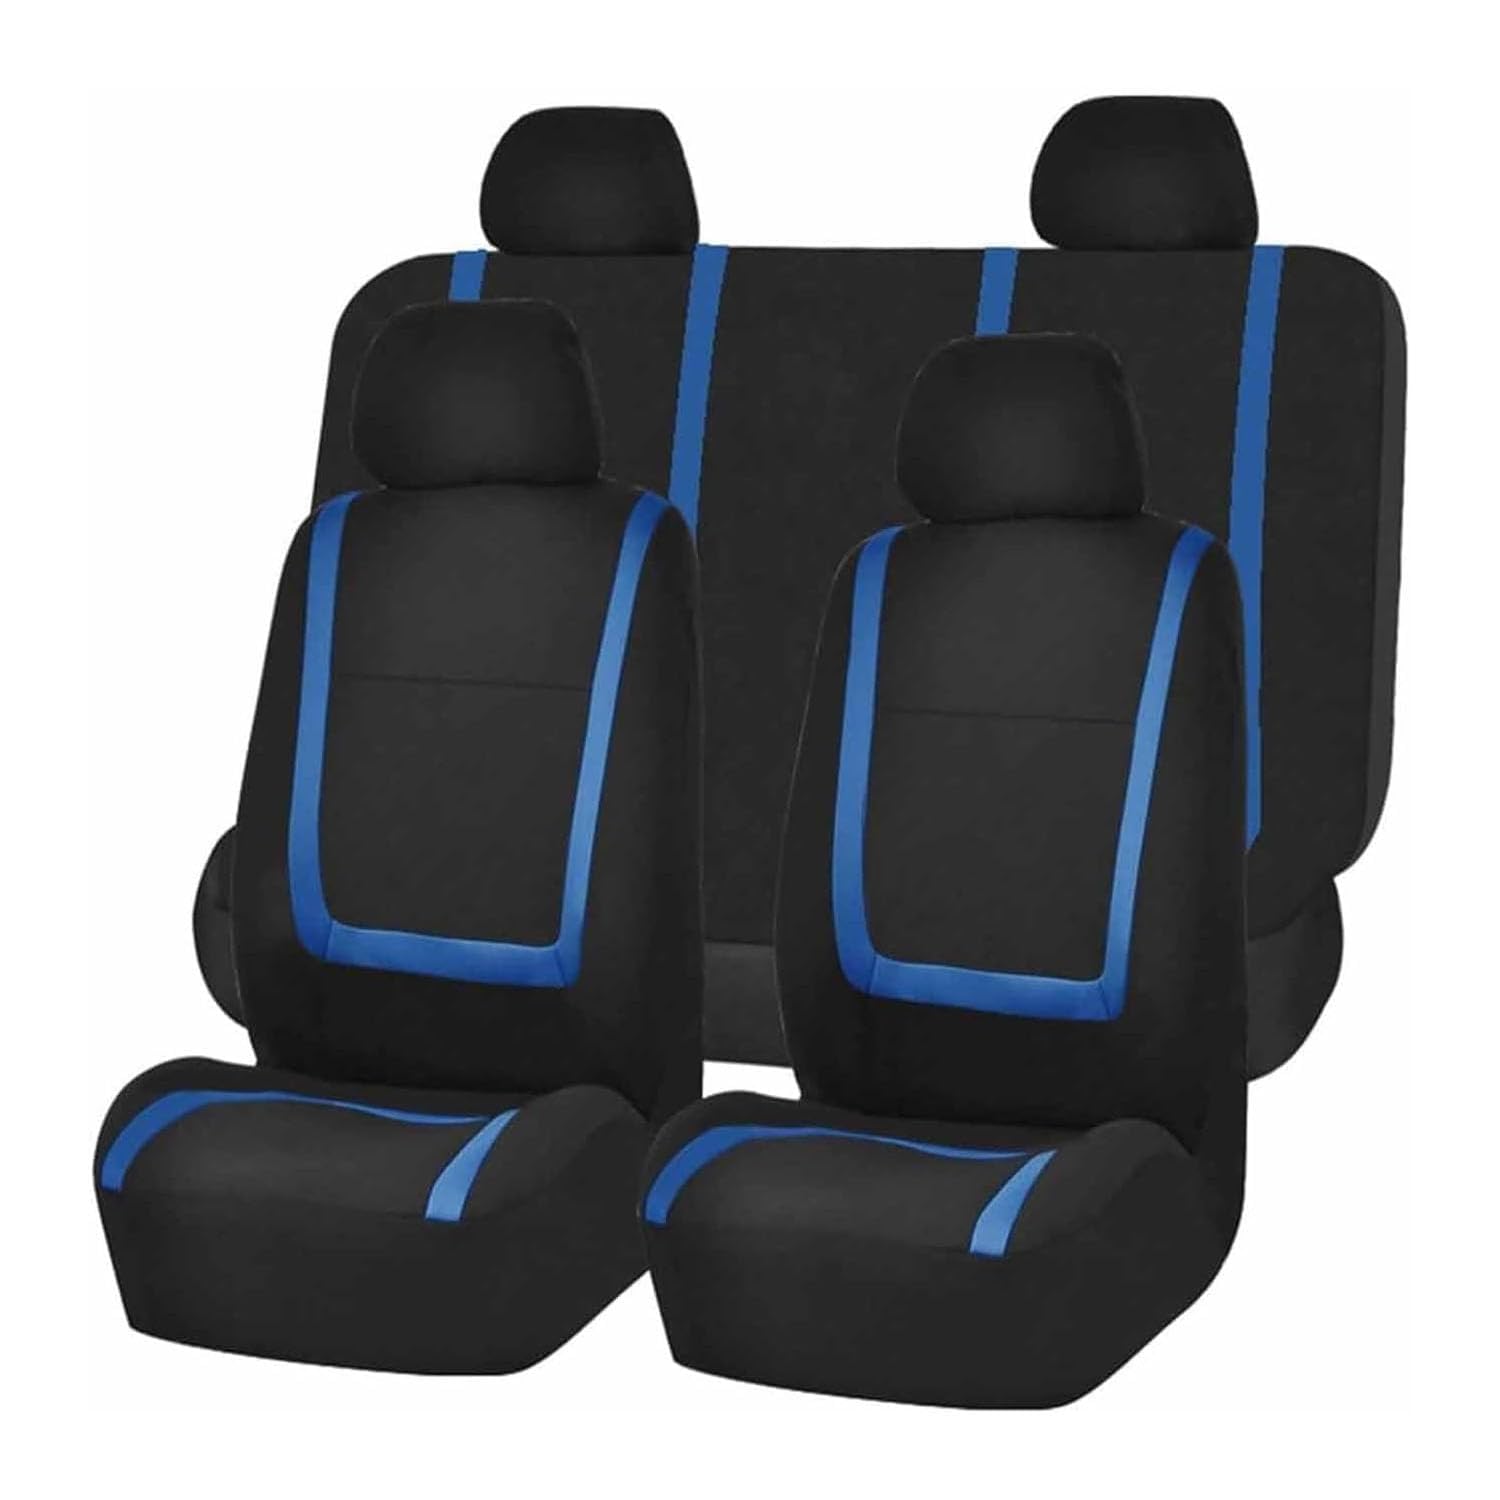 VewZJJ Auto Sitzbezügesets für Subaru Legacy Sedan,Komfortabler Atmungsaktiv Sitzschoner Satz Sitzbezug,rutschfest Wasserdichter Vorne RüCkbank Autositz SitzbezüGe,Black-Blue von VewZJJ